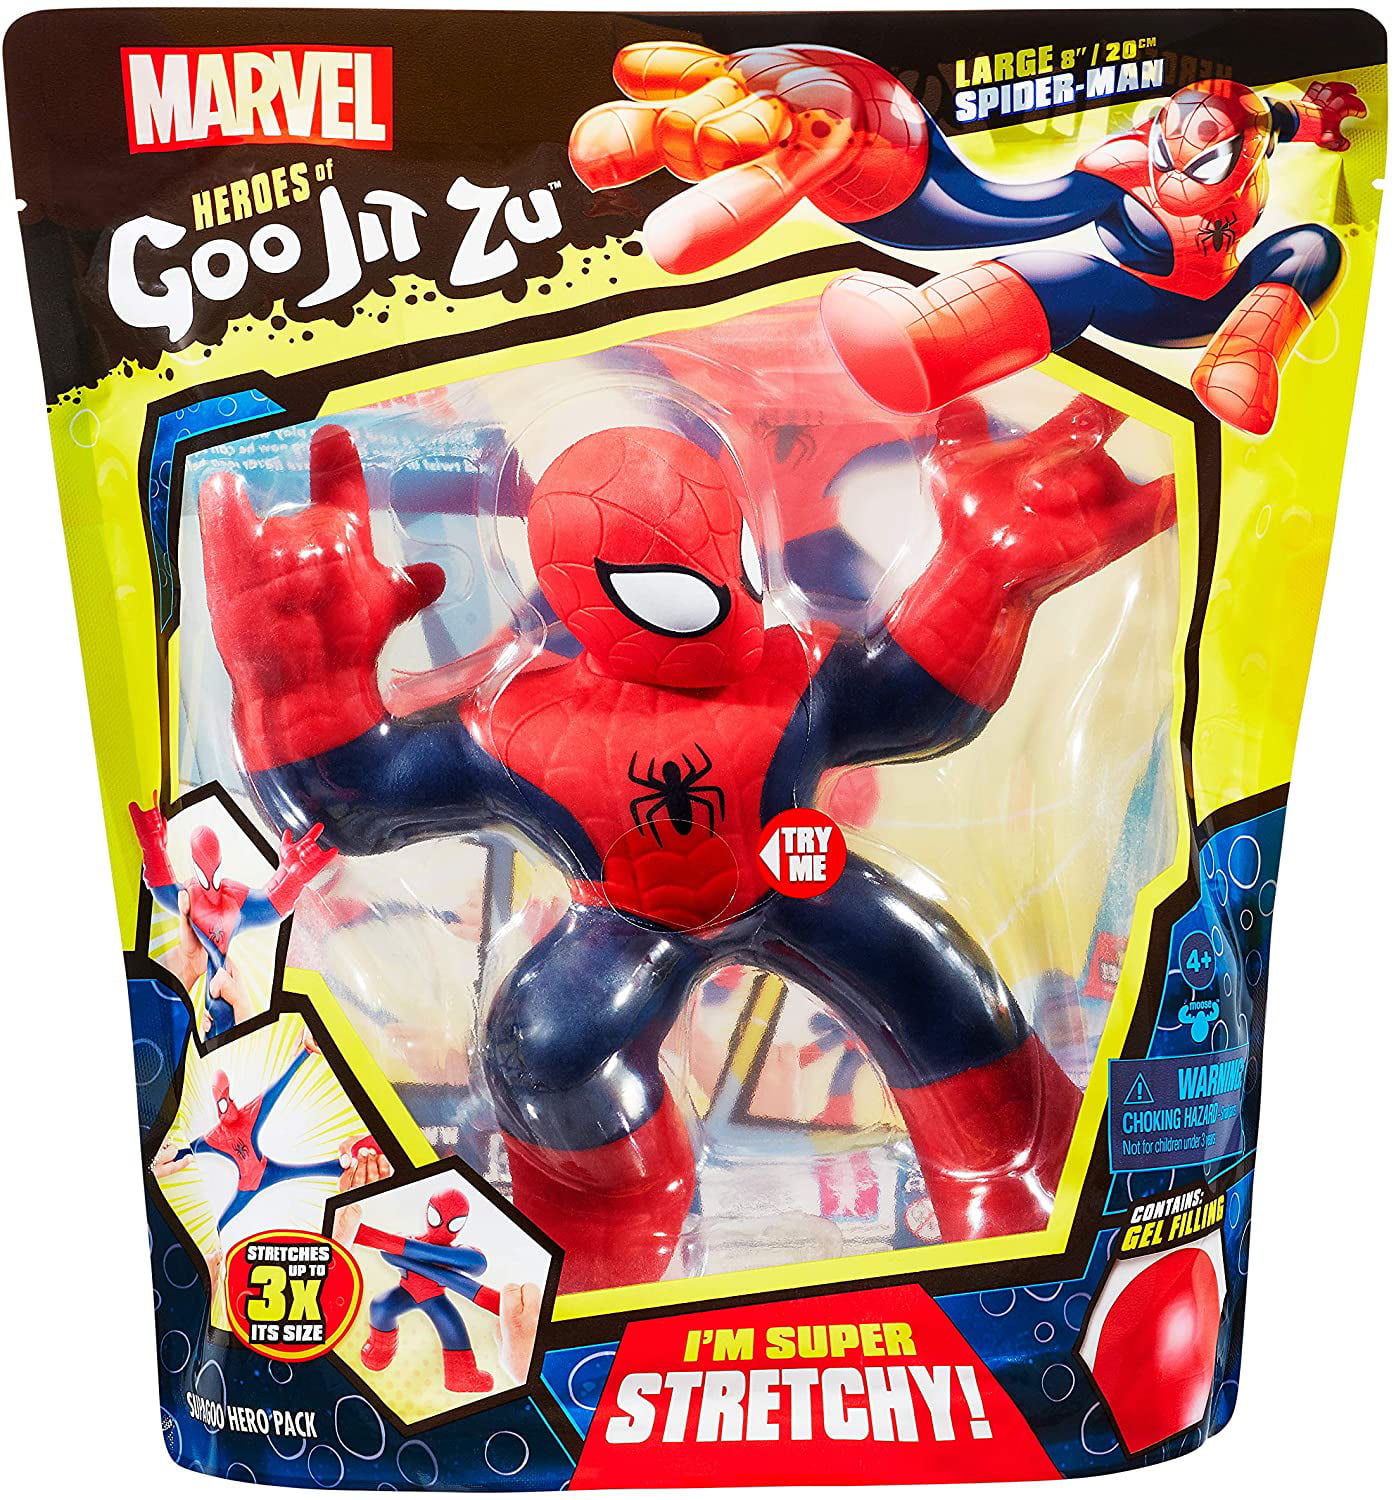 Marvel Heroes of Goo JIT Zu Spider-man VS Venom Stretches 3x It's Size for sale online 